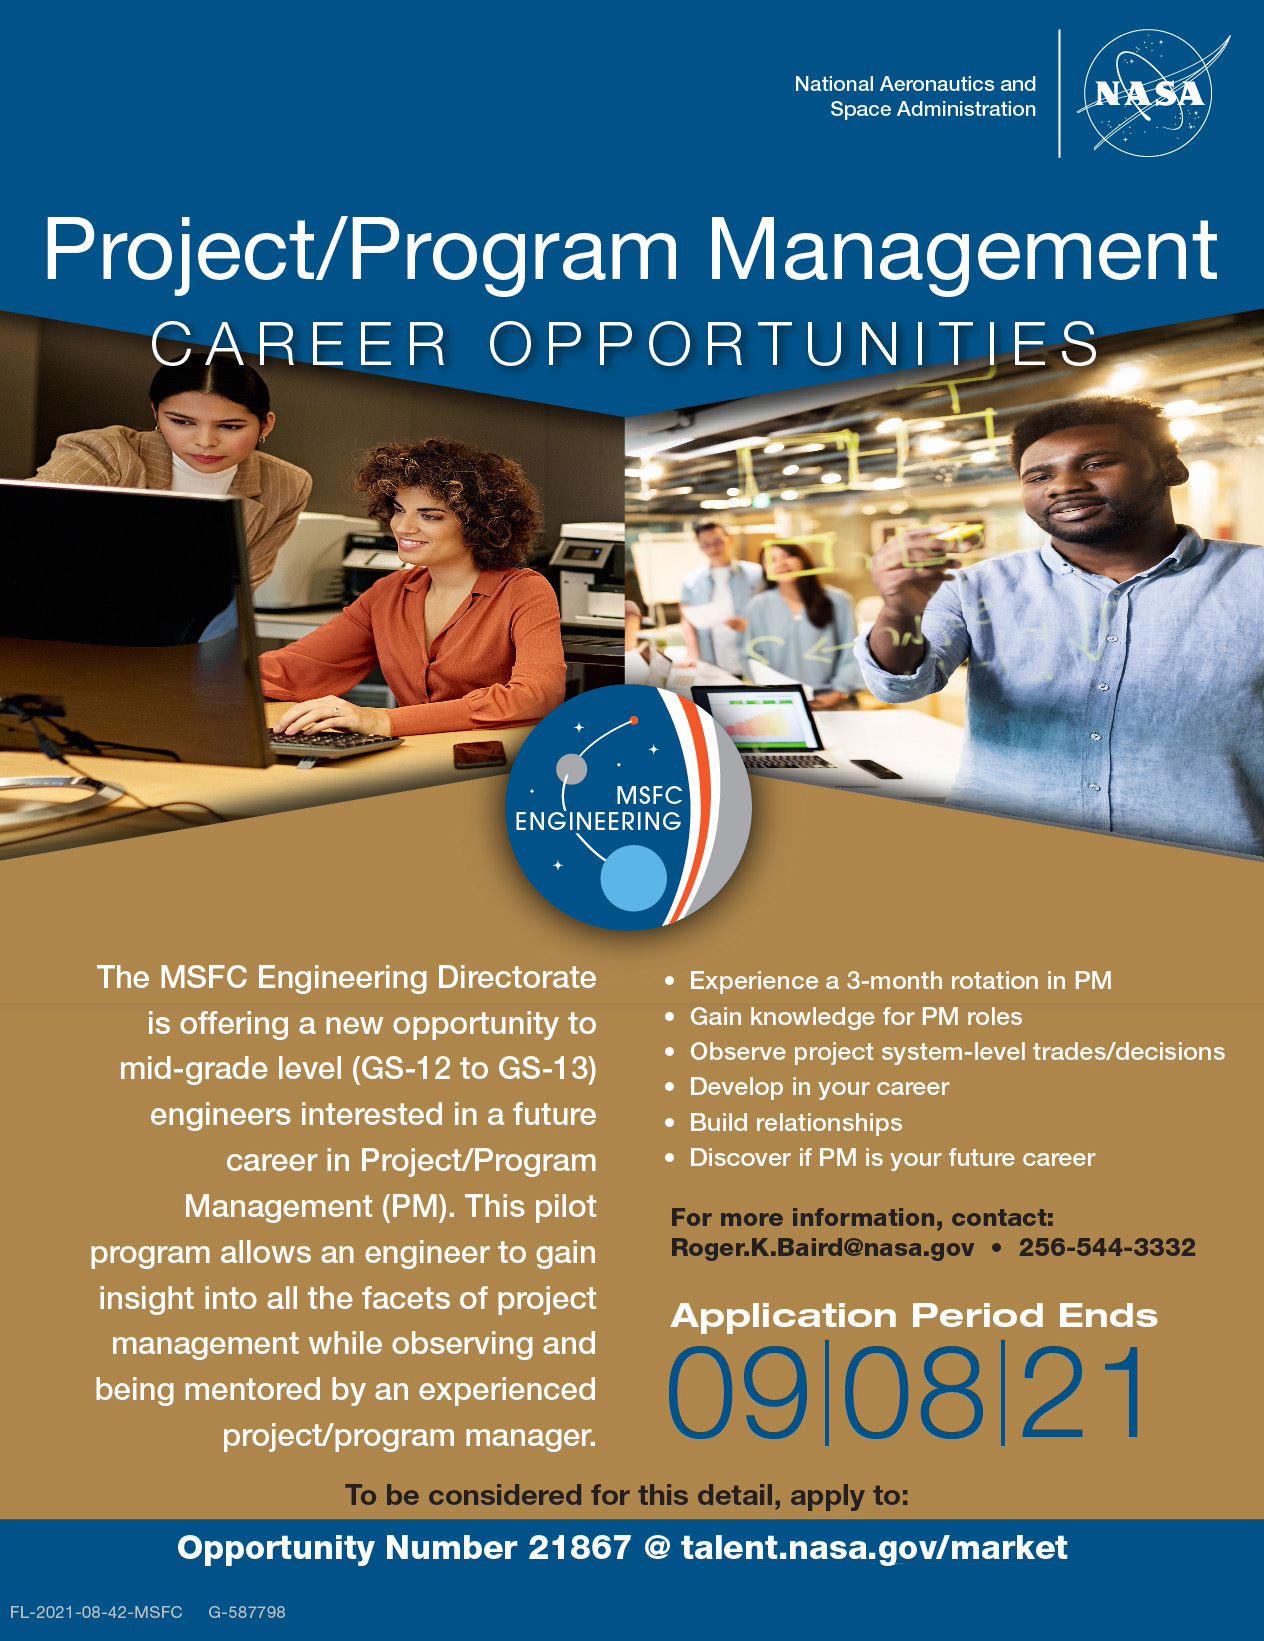 Project/Program Management Career Opportunities flier.